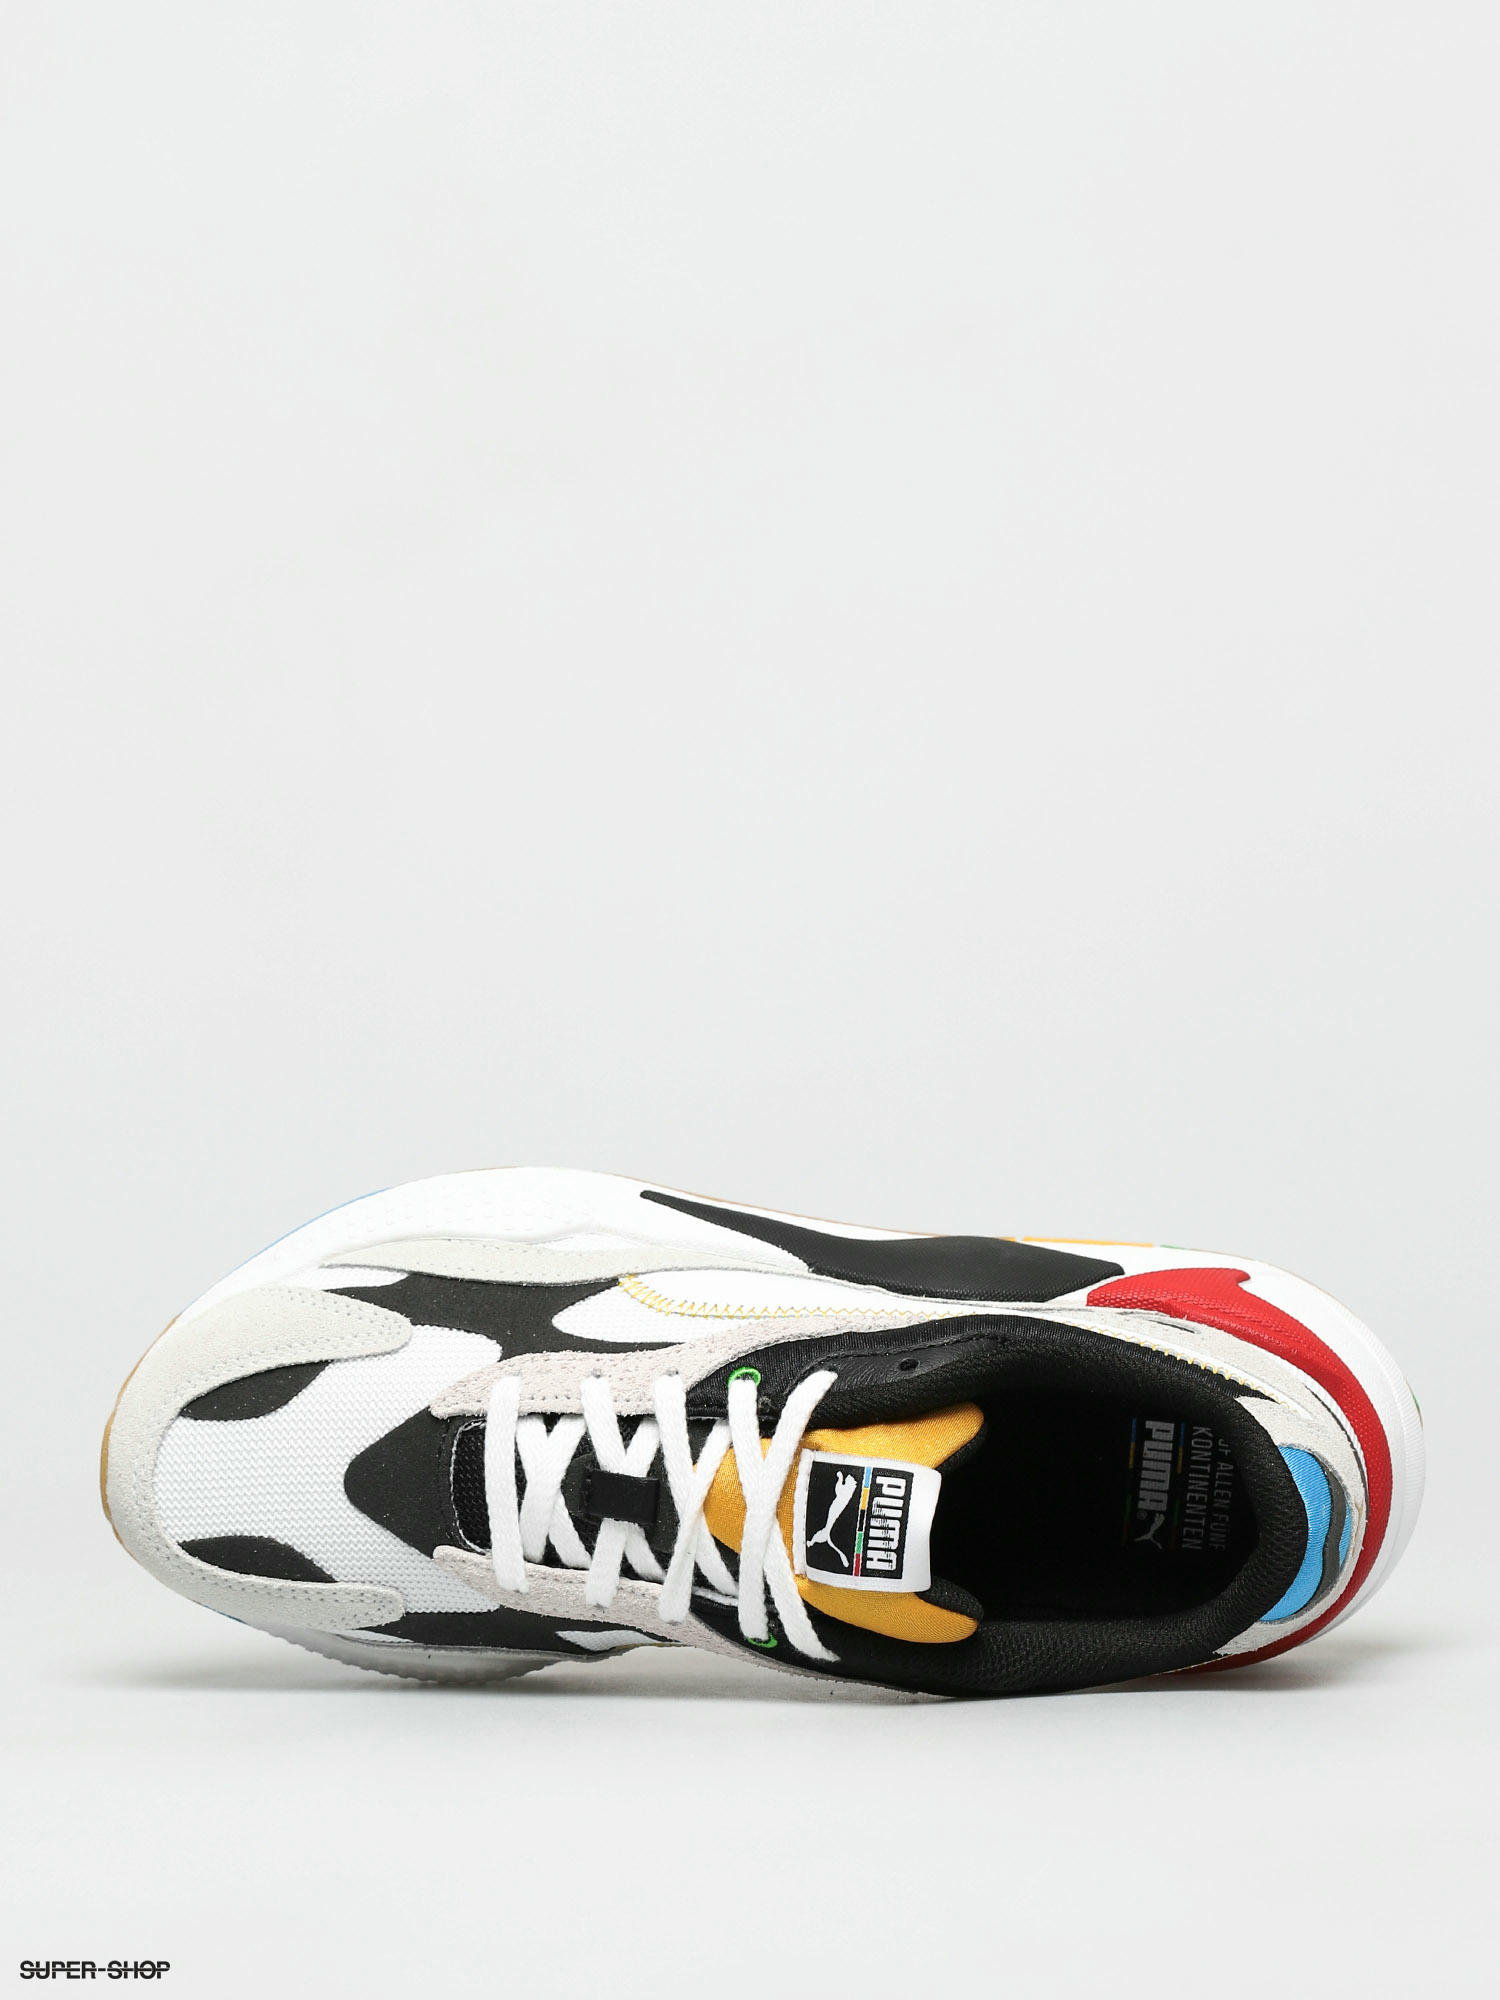 Puma Rs X Wh Shoes (white/black)